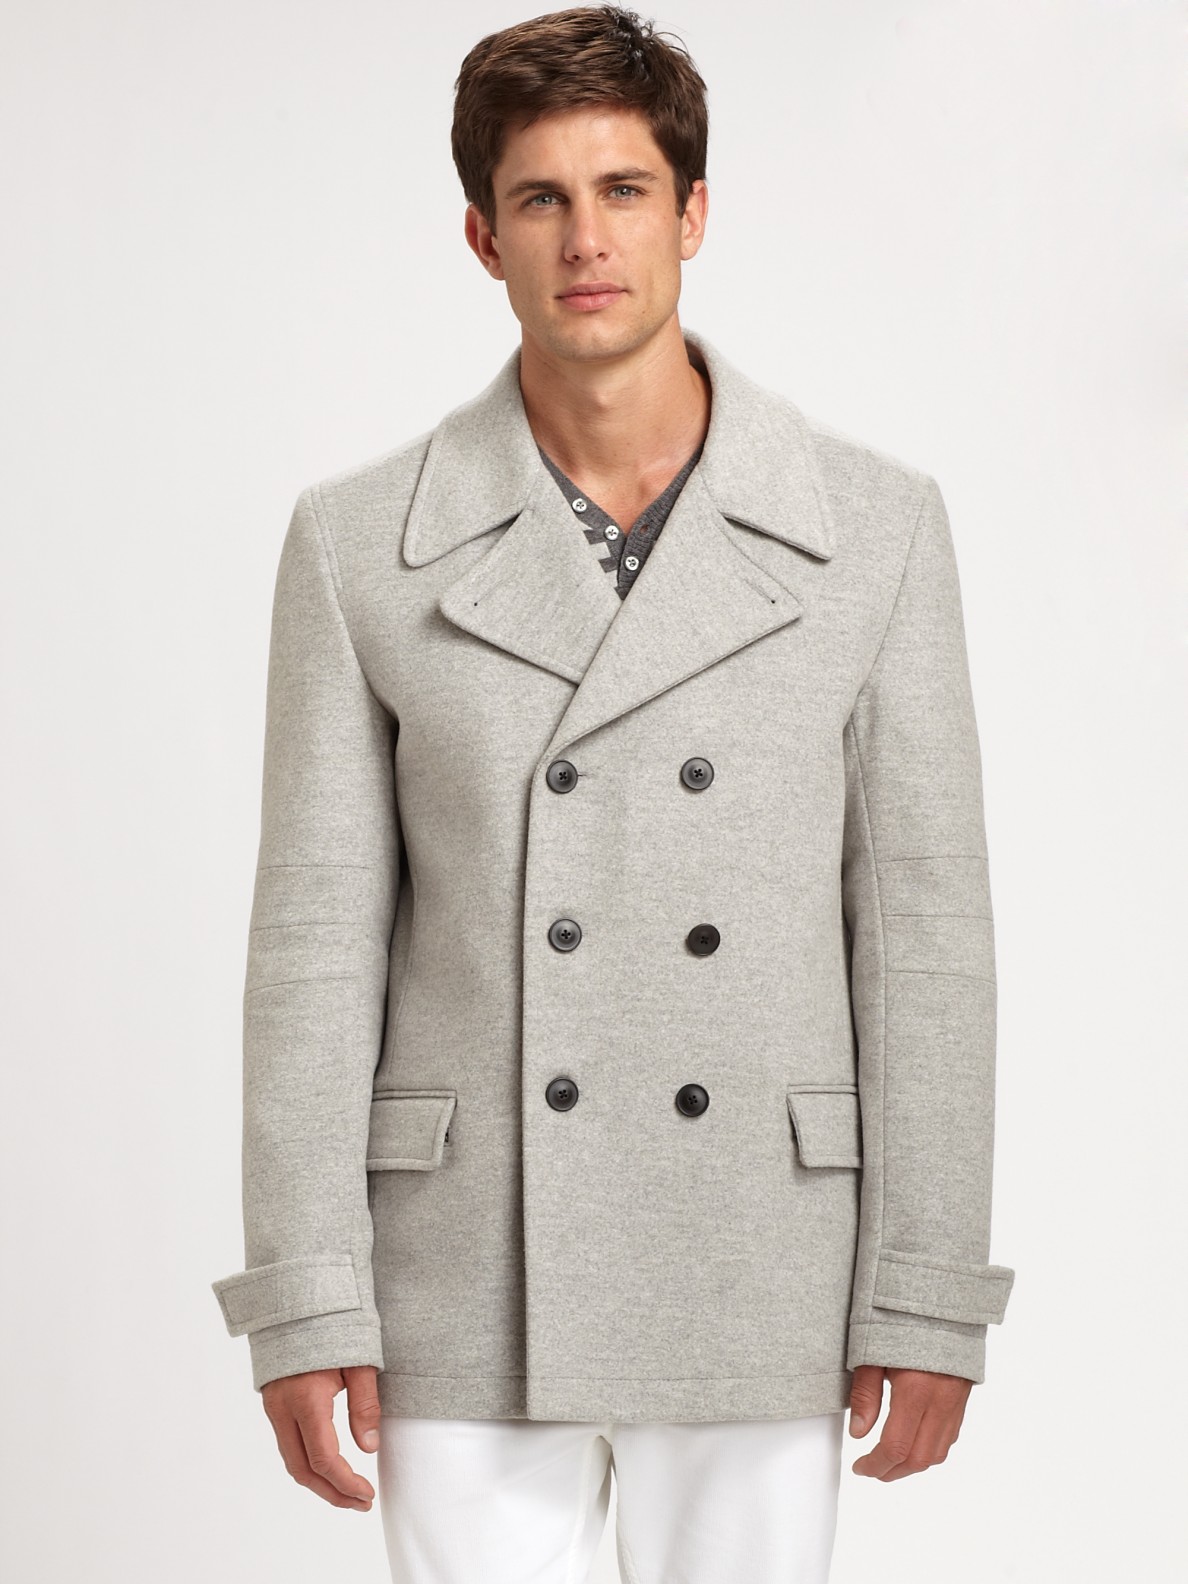 Lyst - Saks Fifth Avenue Wool Peacoat in Gray for Men